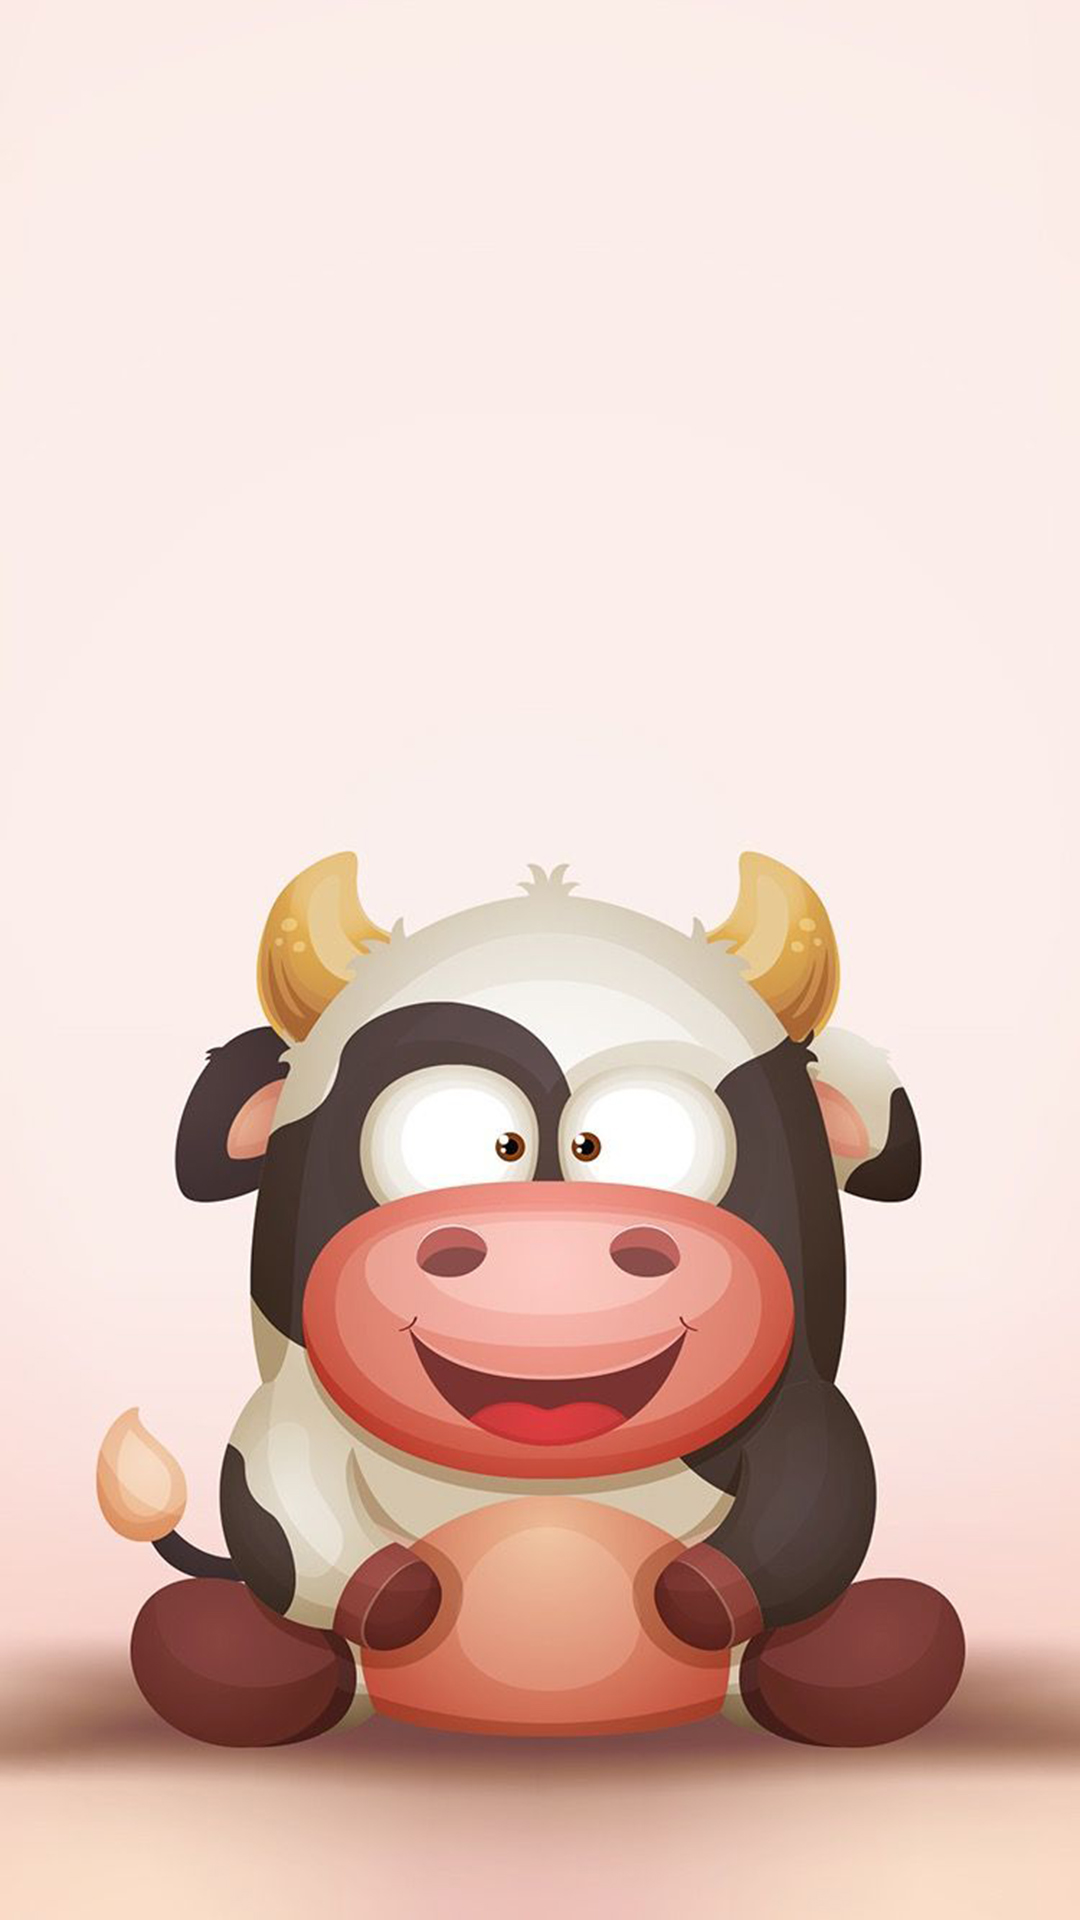 Cute Cartoon Cow Wallpapers